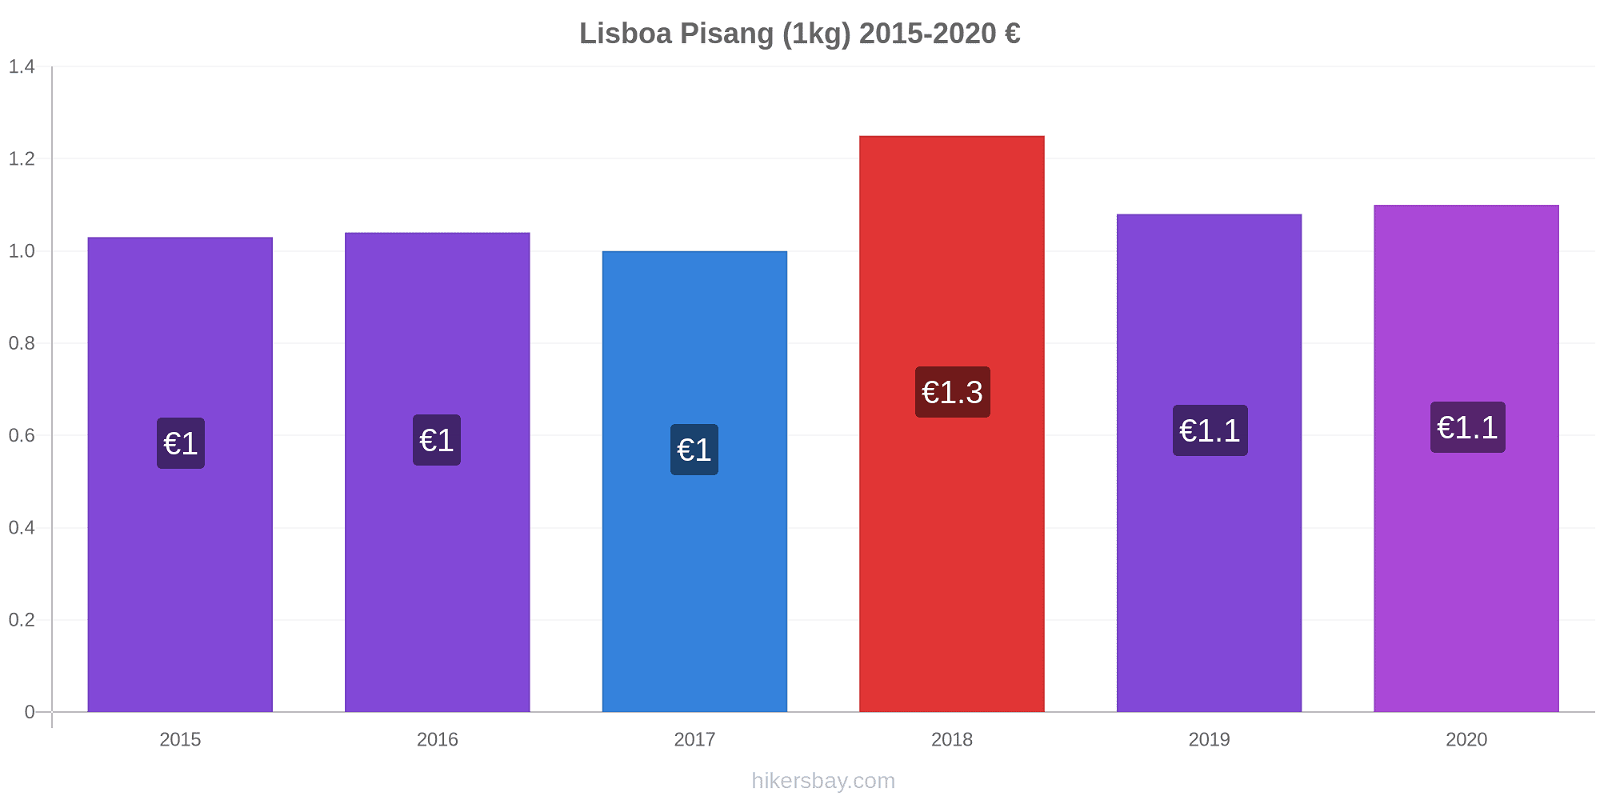 Lisboa perubahan harga Pisang (1kg) hikersbay.com